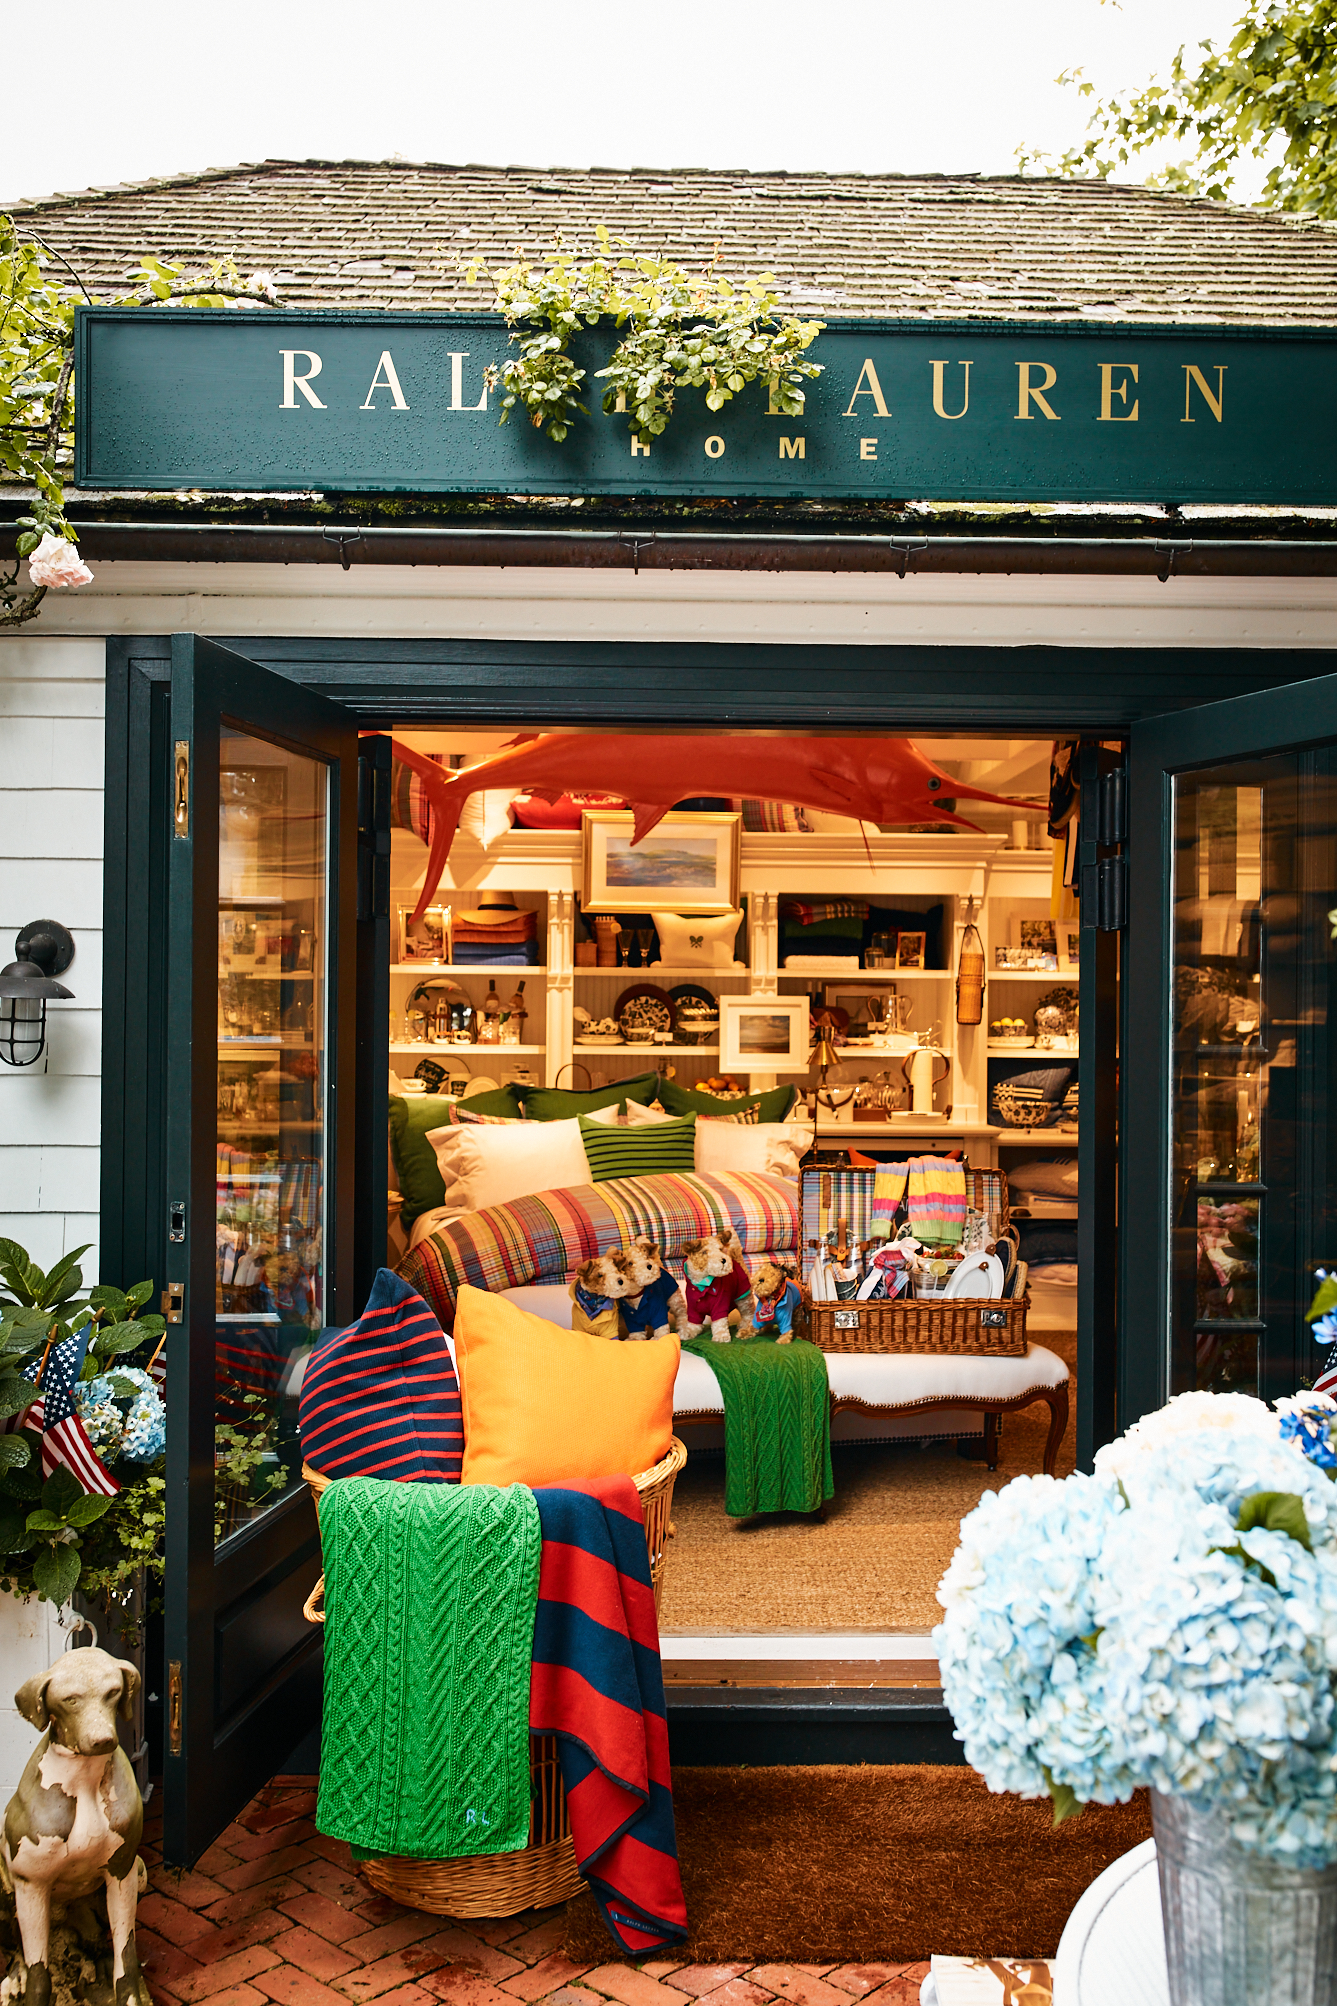 Ralph Lauren - Visit the Ralph Lauren Home Cottage, set behind our